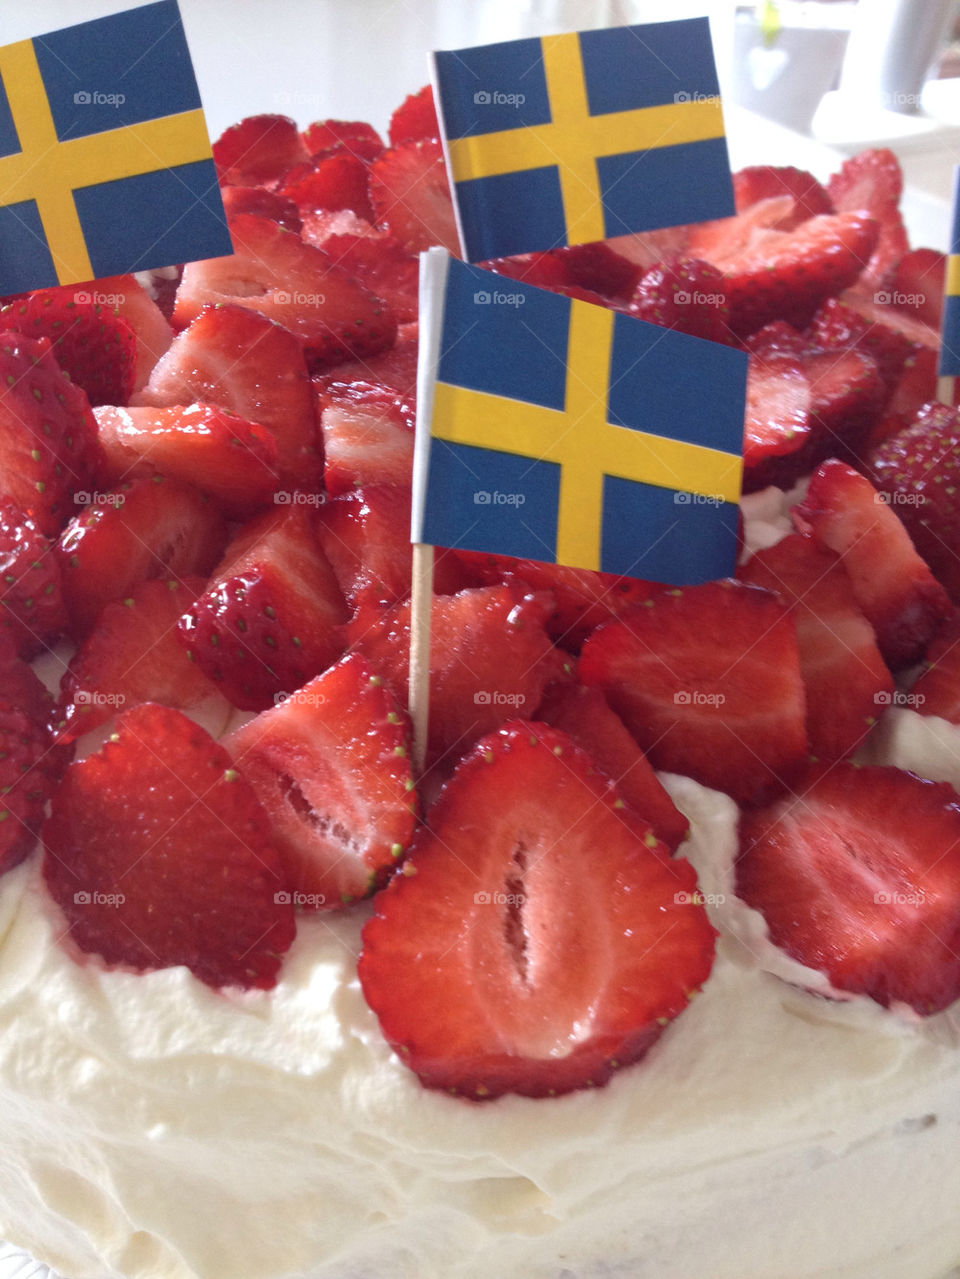 sweden strawberry västerås flags by humla